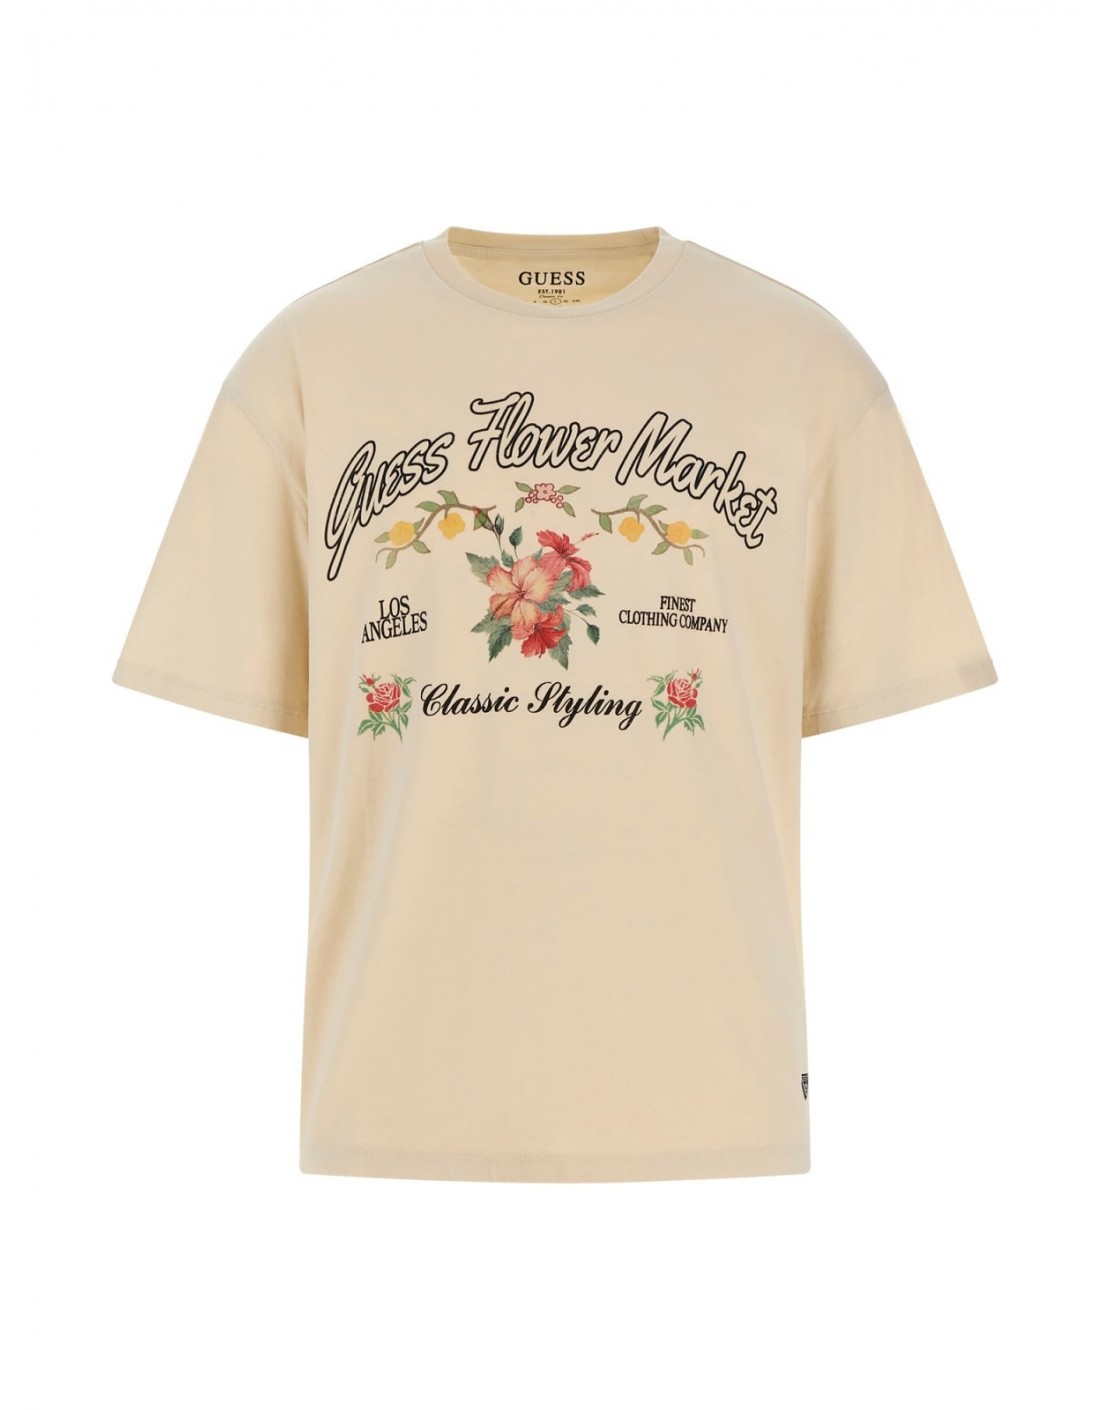 Guess Camiseta SS BSC Flower Market